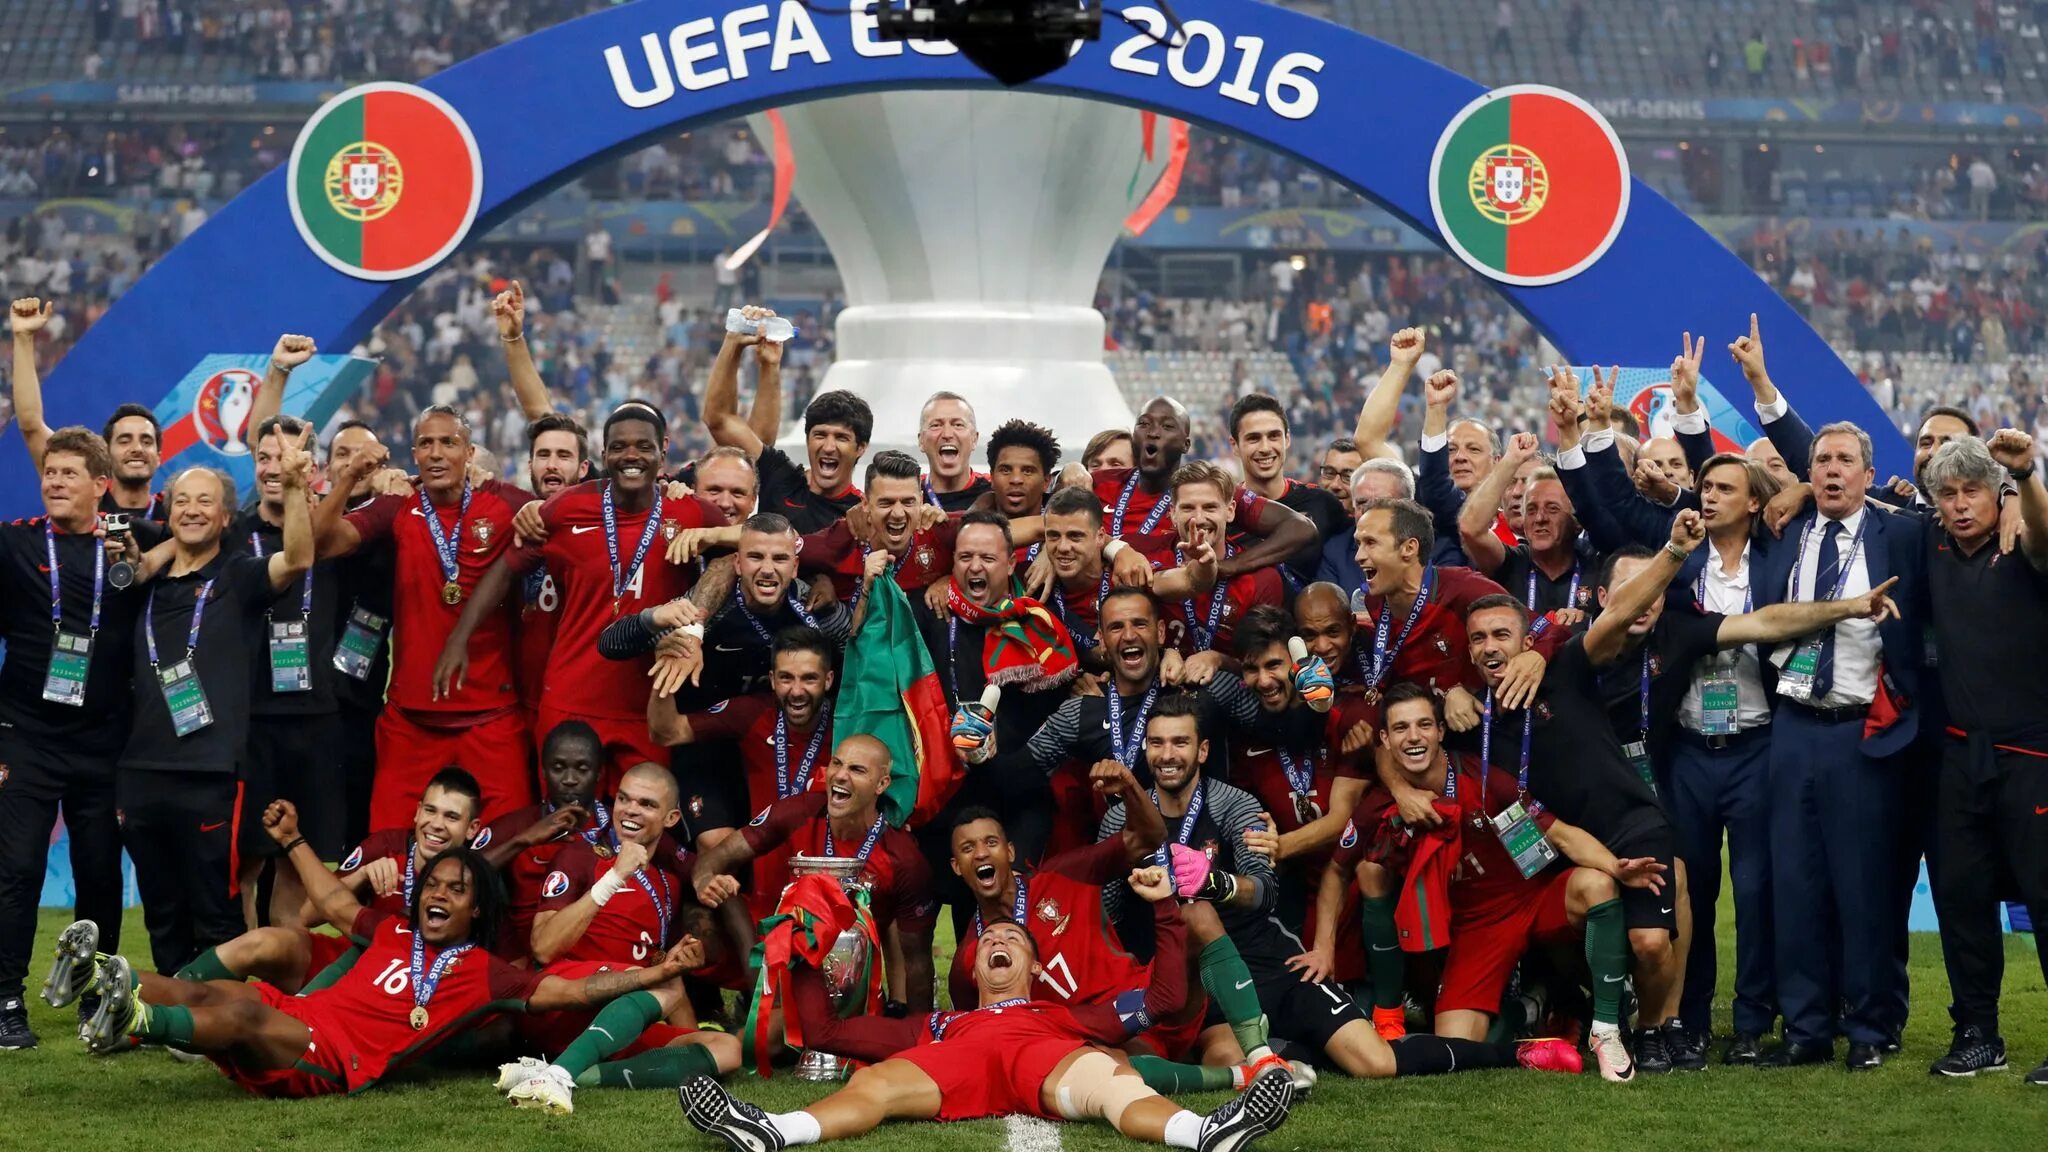 Кубок футбола 2016. Португалия выиграла евро 2016. Португалия чемпион Европы по футболу 2016. Португалия чемпион Европы 2016. Победа Португалии на евро 2016.